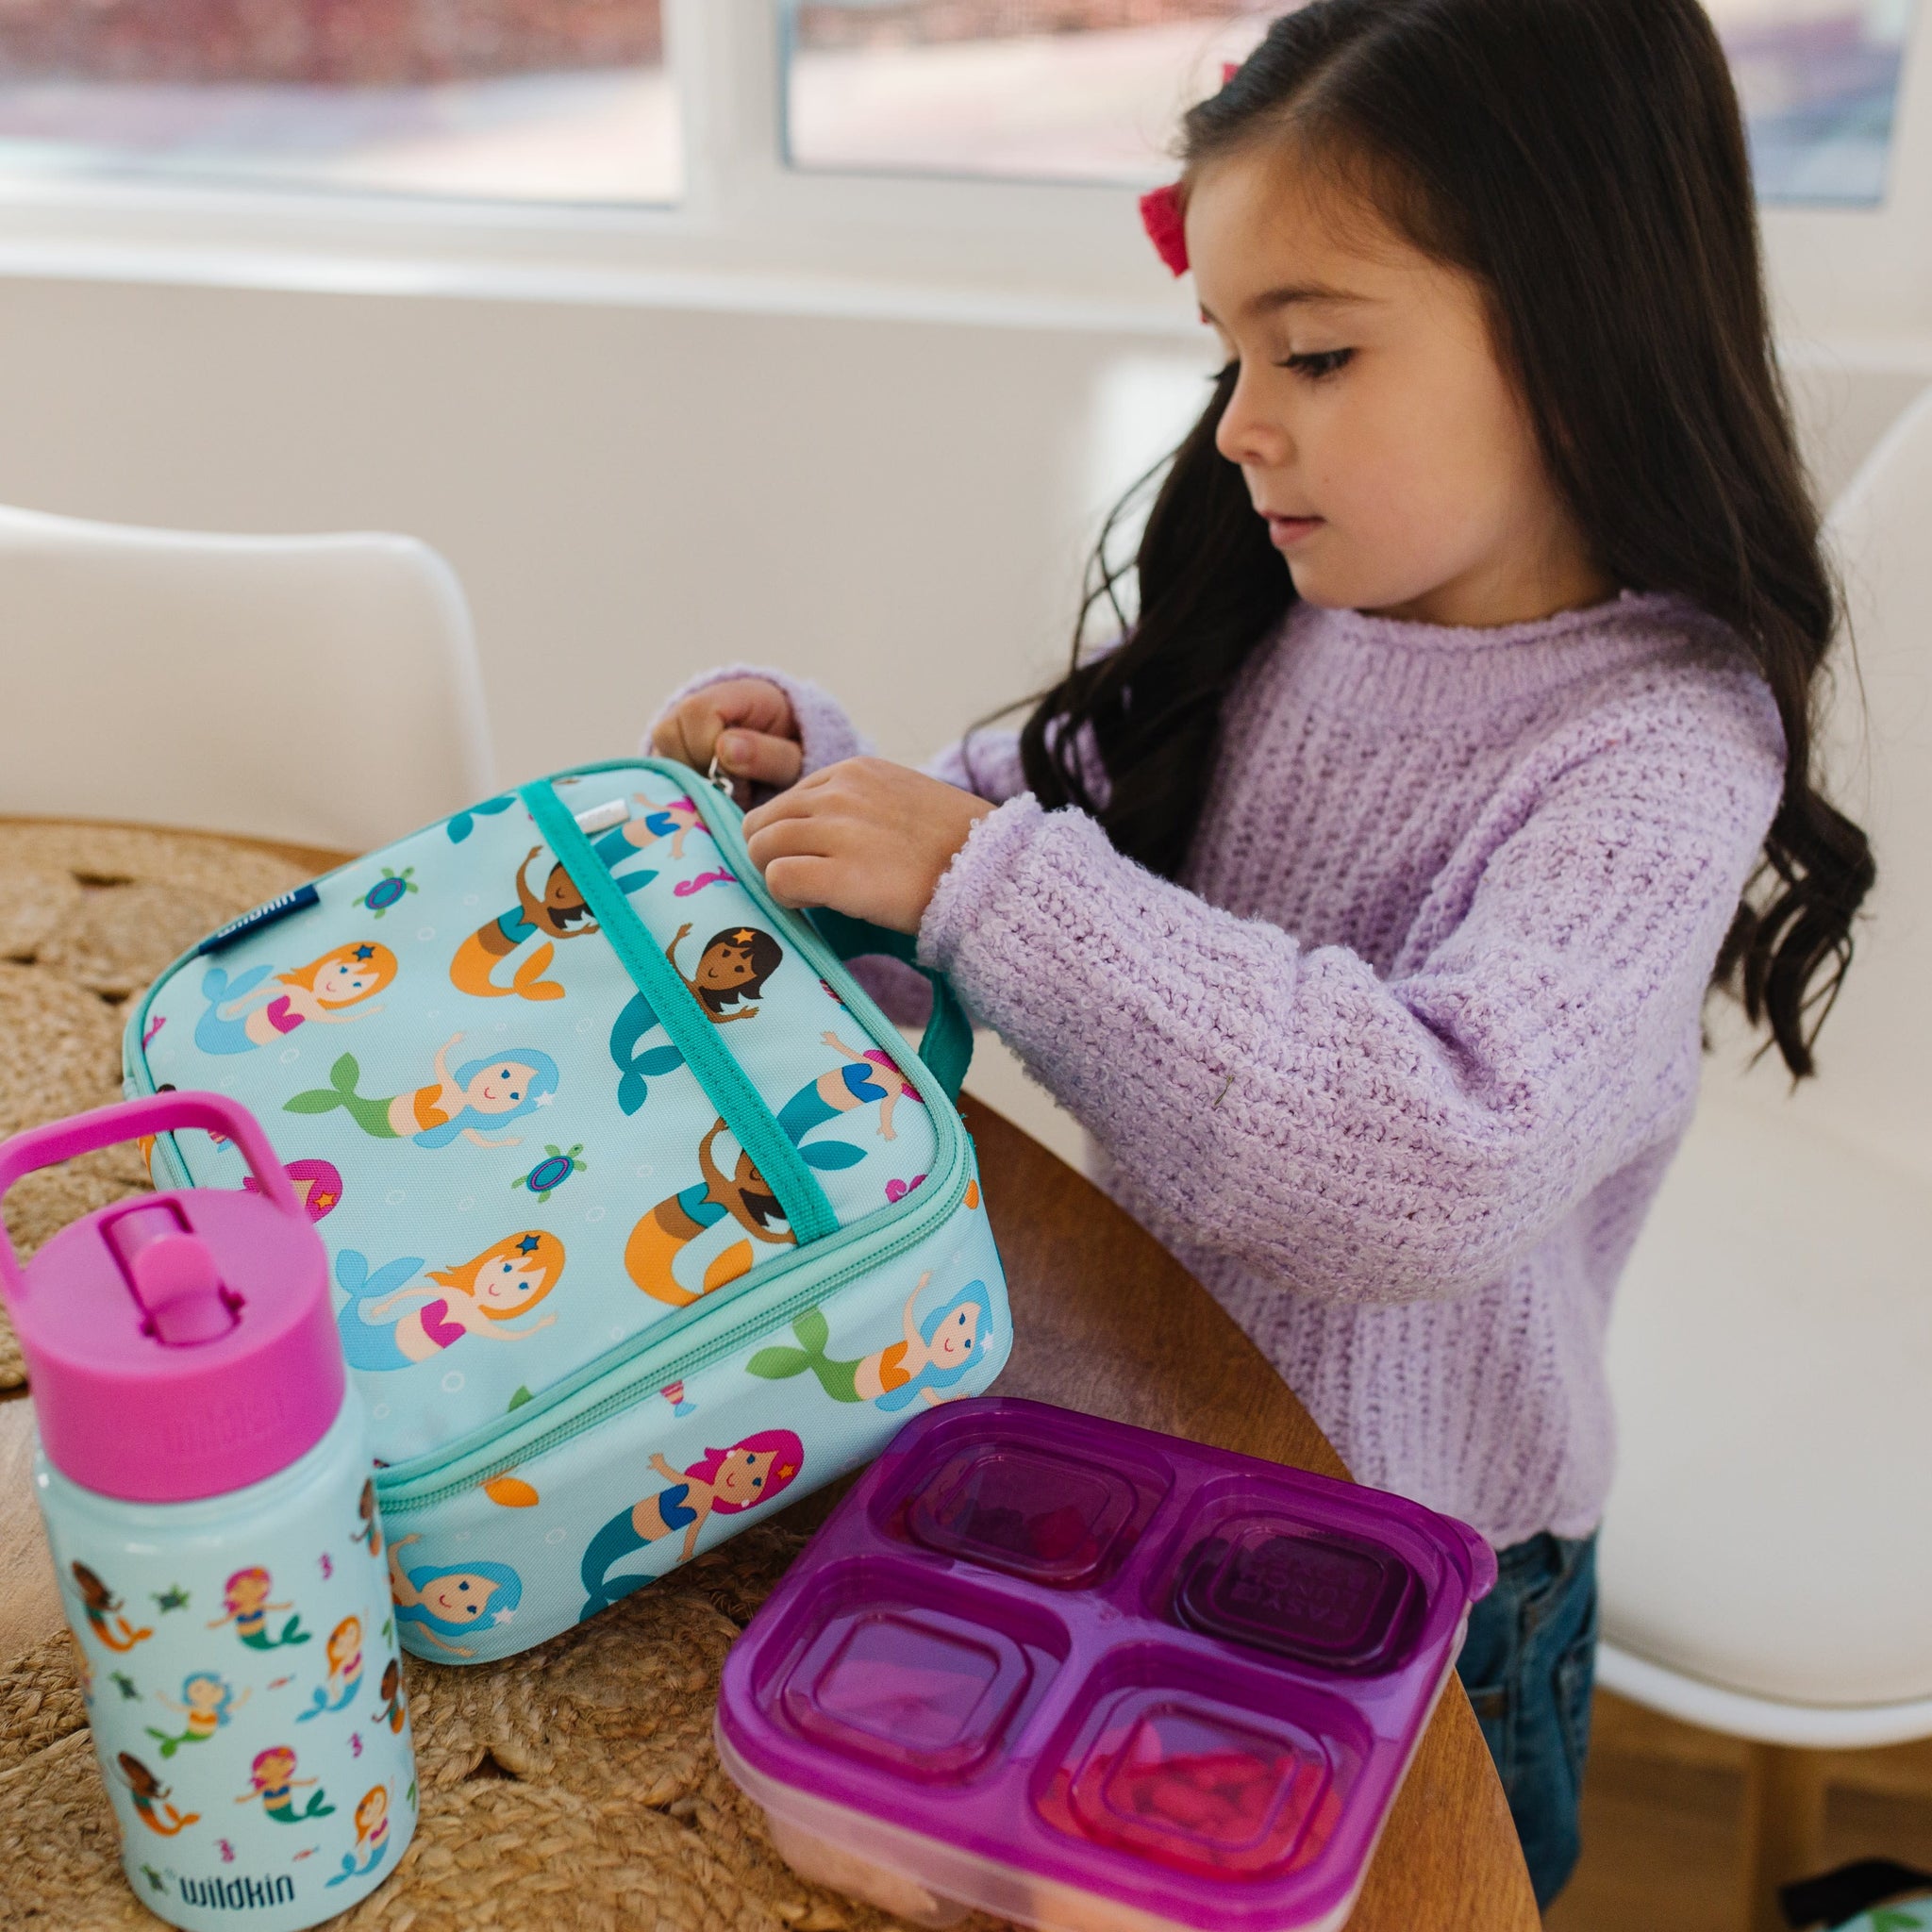 Wildkin Kids Insulated Clip-in Lunch Box for Boys & Girls, BPA